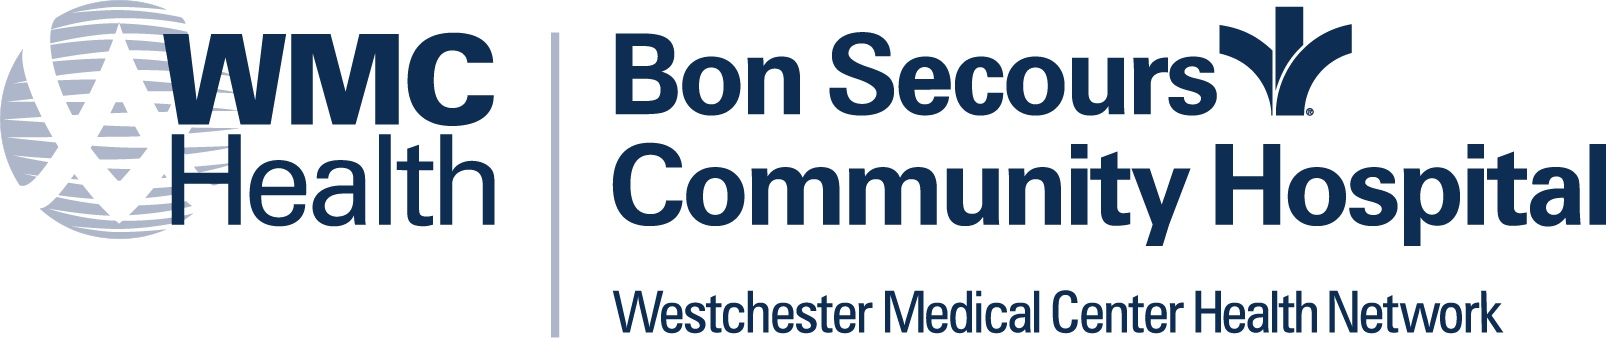 Bon Secours Community Hospital